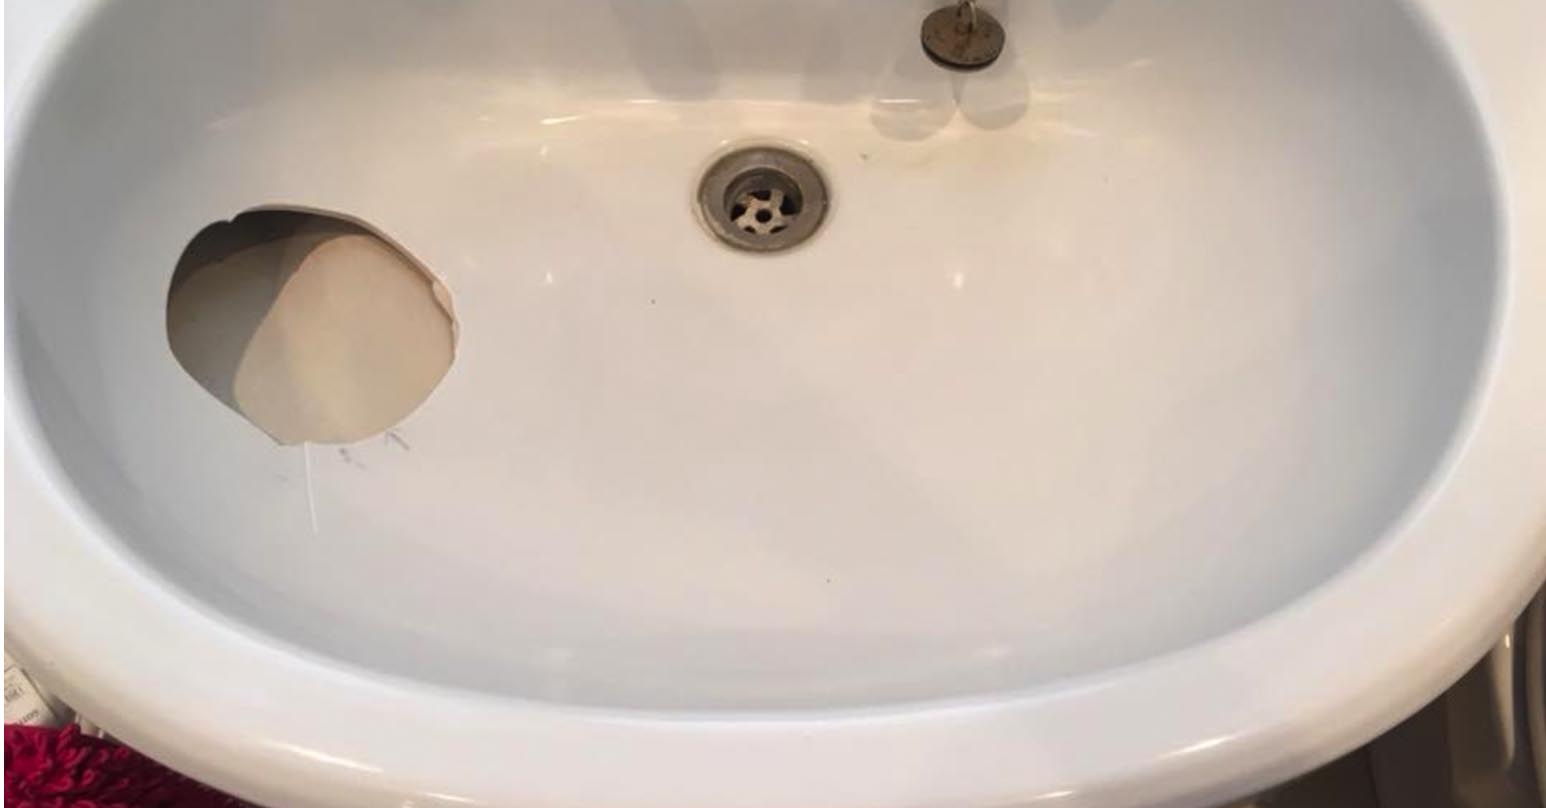 my ceramic bathroom sink cracked